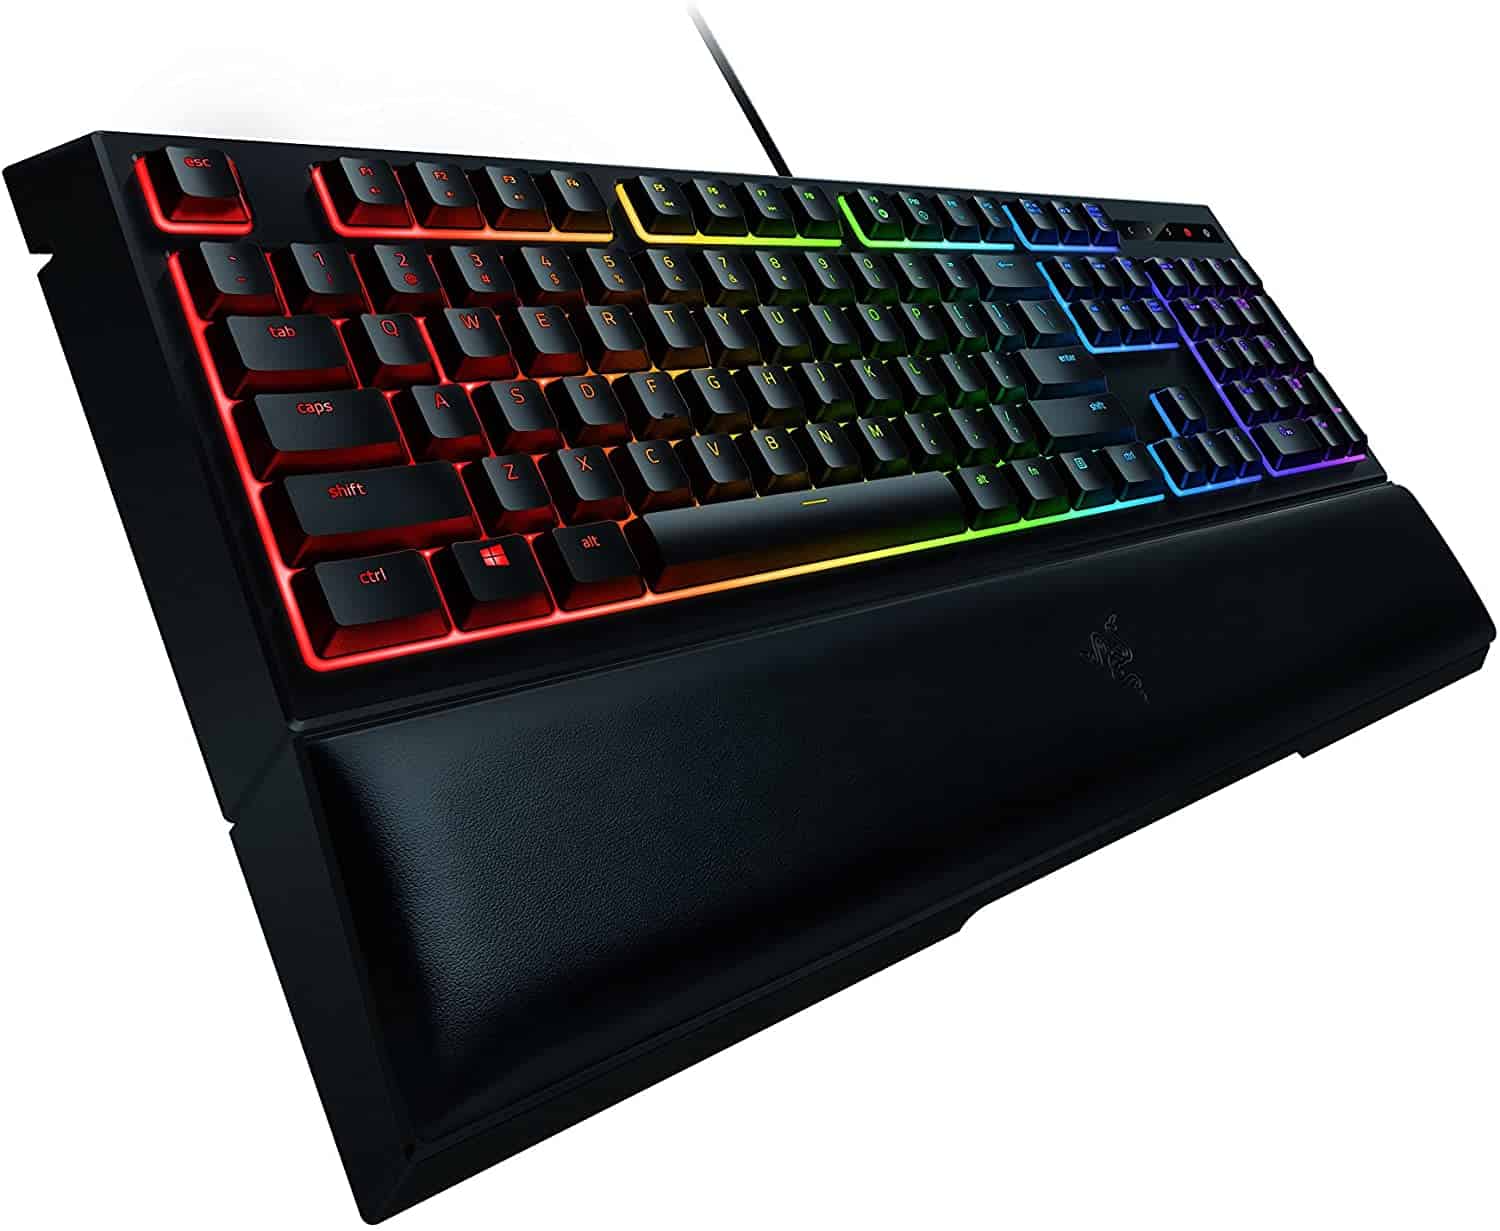 Deal Alert: Razer Ornata Chroma Gaming Keyboard now available at $70